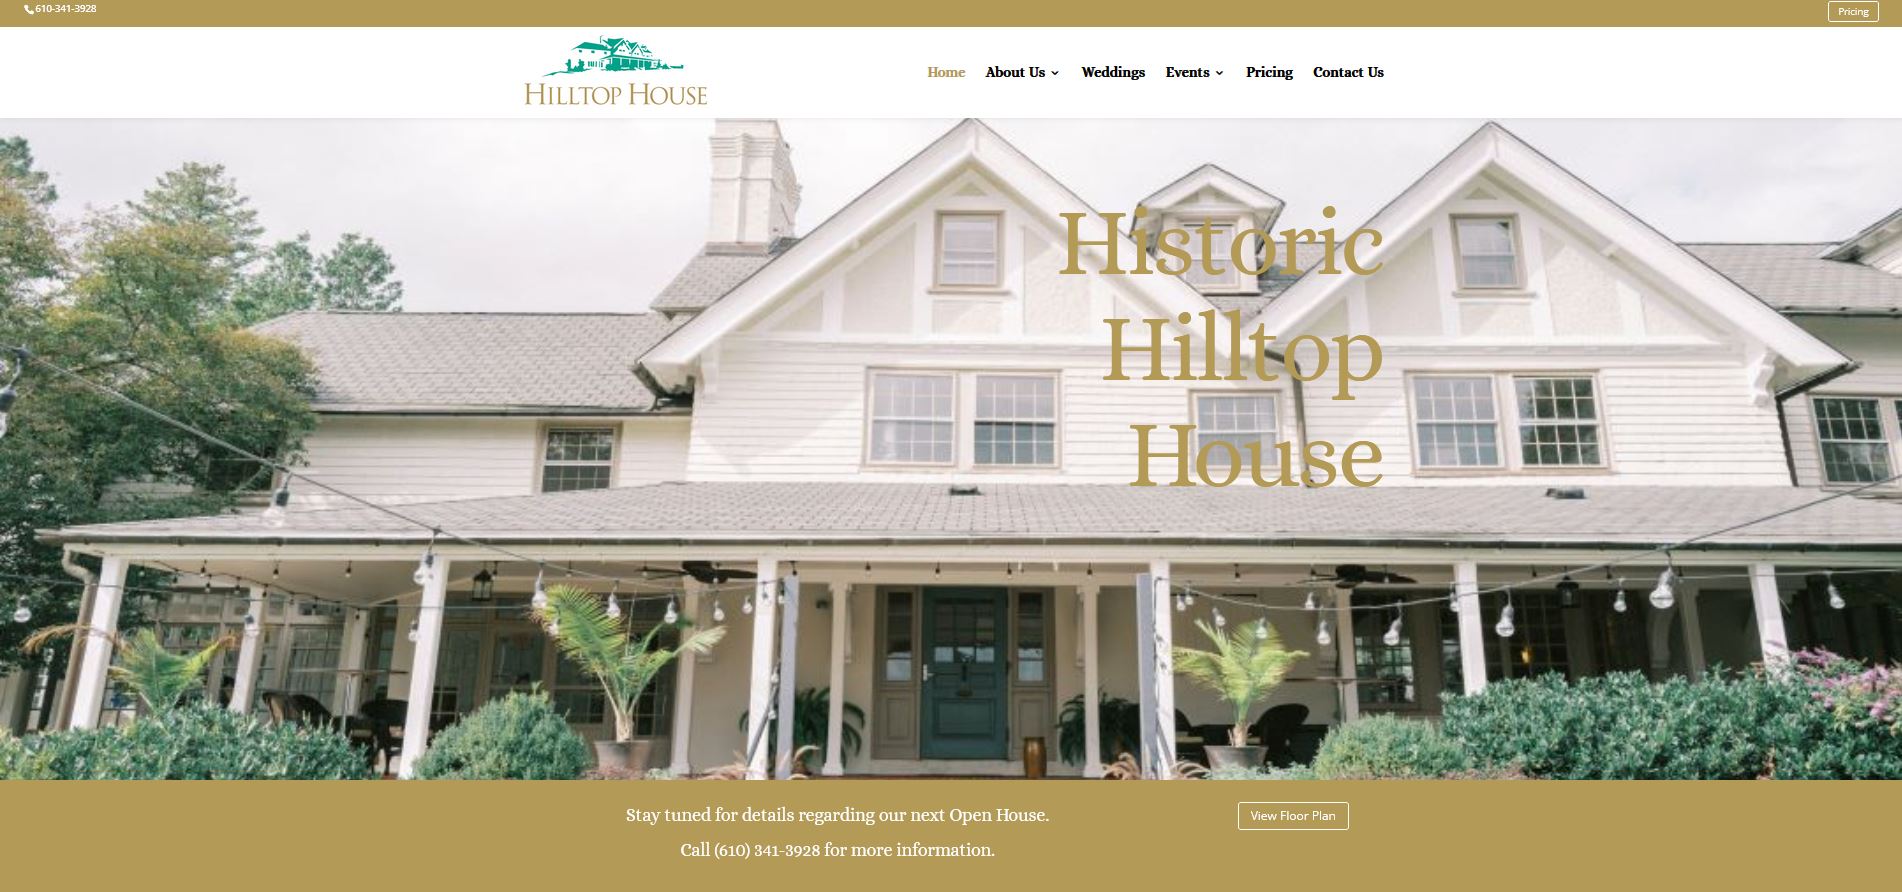 Hilltop House Website